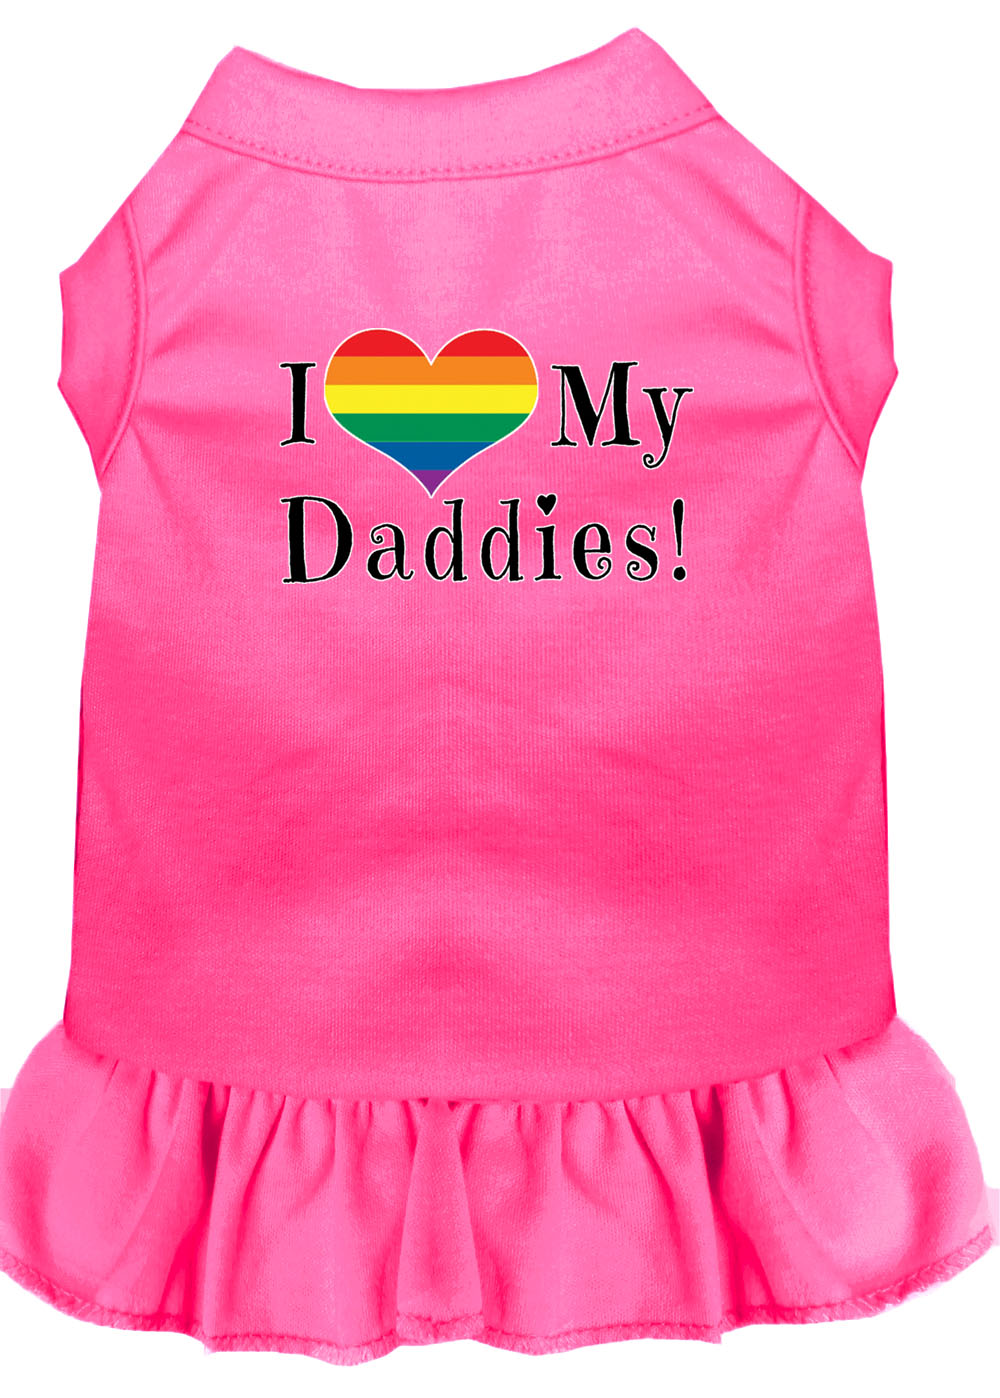 I Heart my Daddies Screen Print Dog Dress Bright Pink Lg